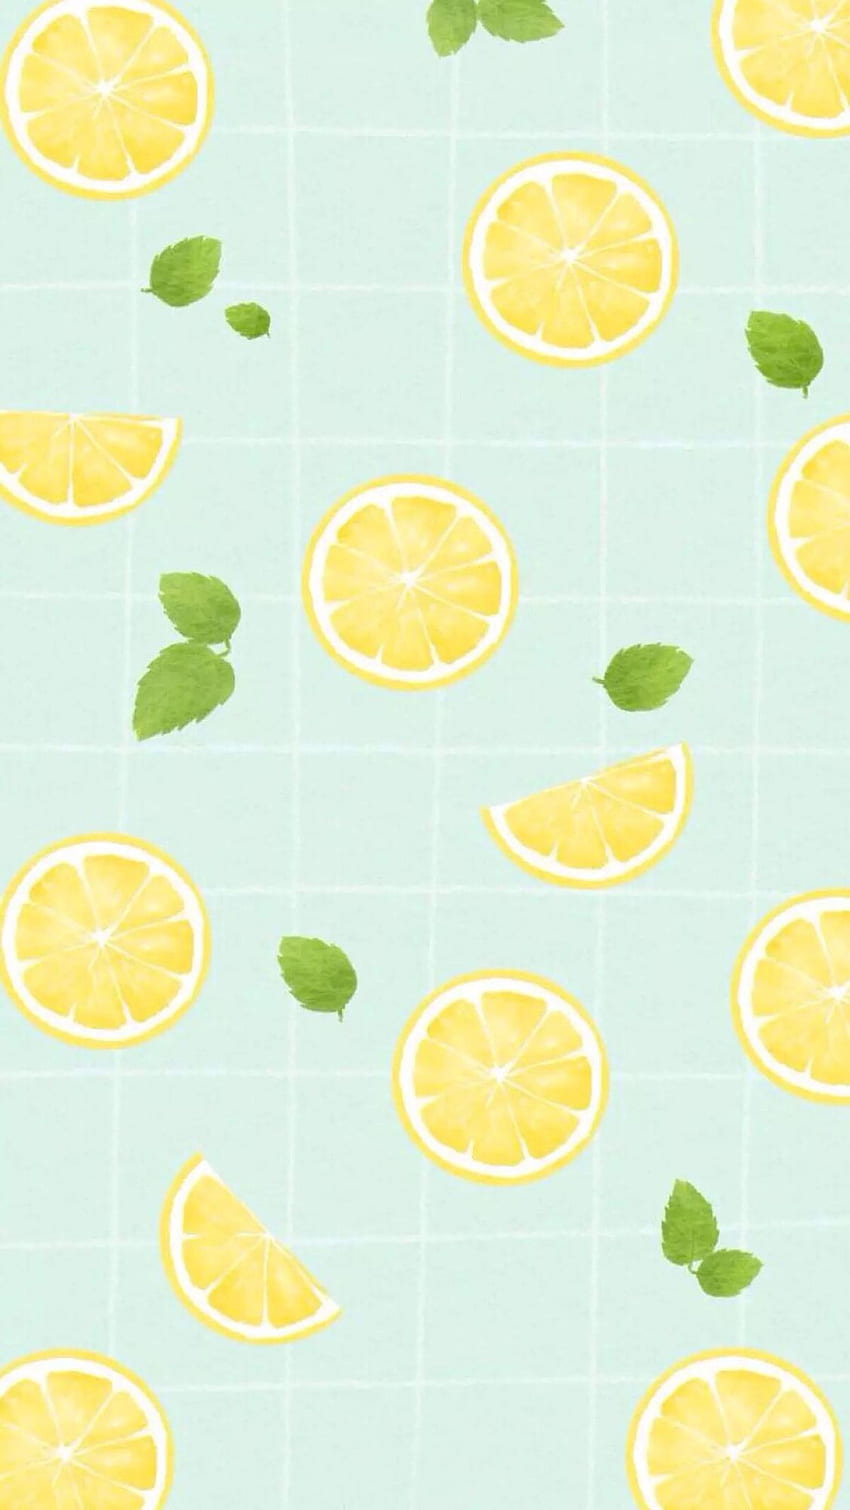 Fruit slice lemon lime orange grapefruit 1080x1920 iPhone 8766S Plus  wallpaper background picture image